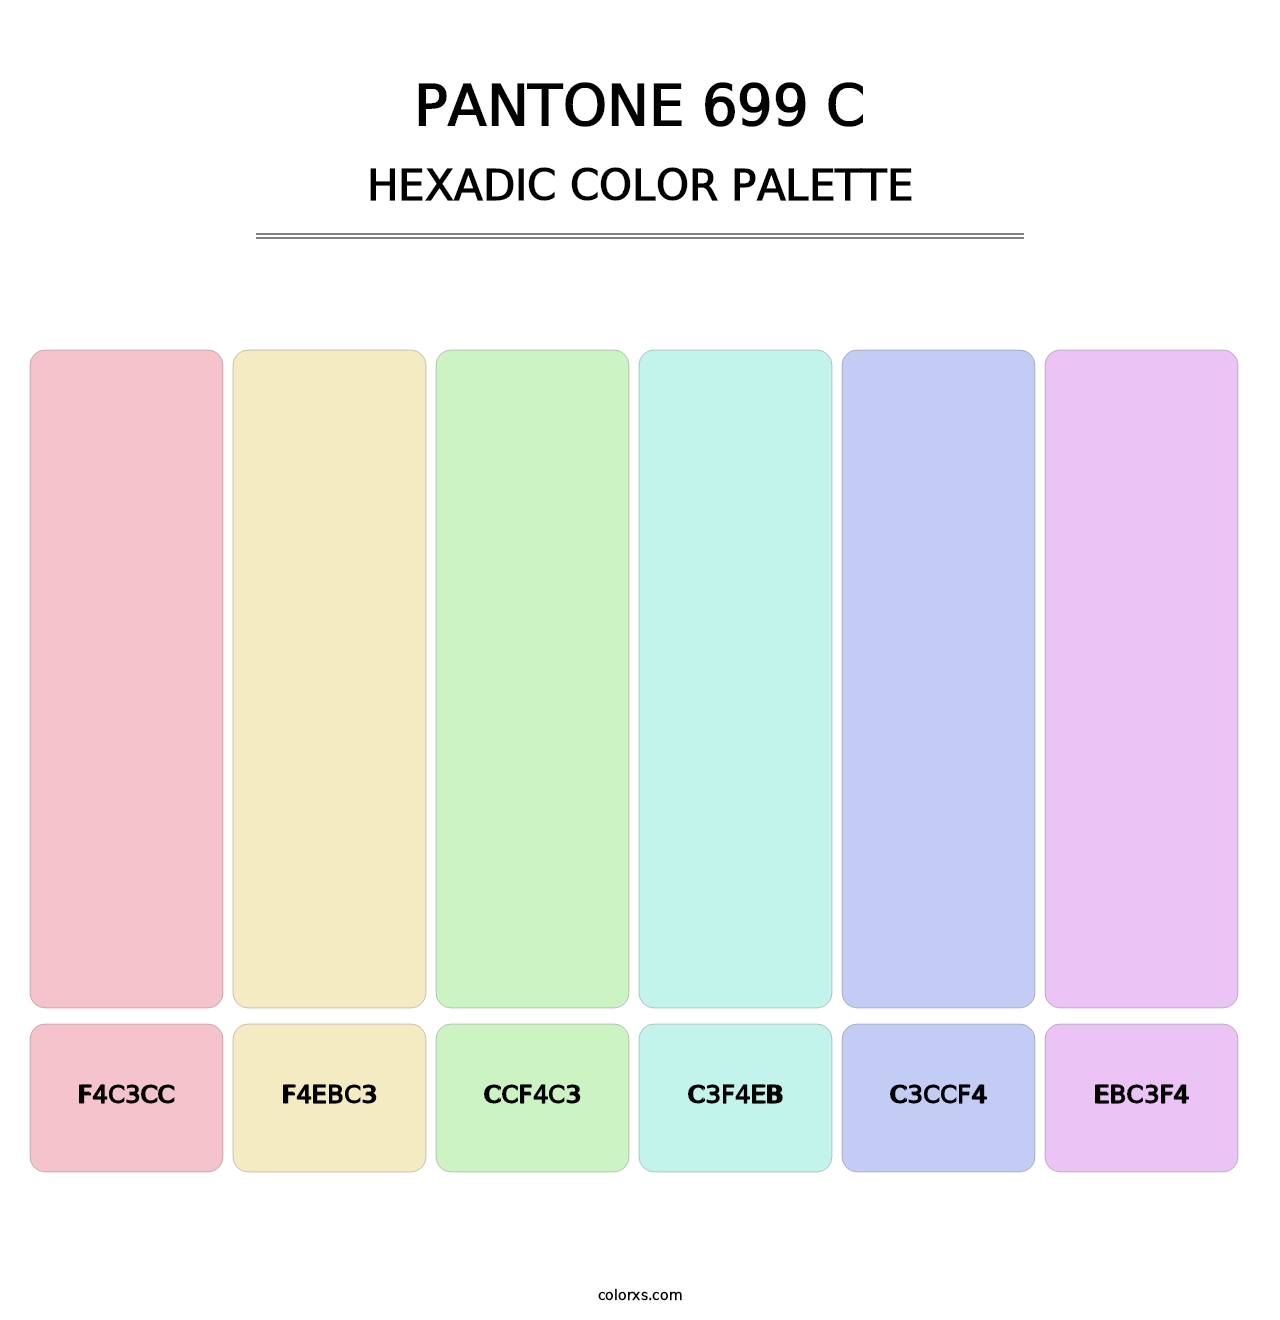 PANTONE 699 C - Hexadic Color Palette